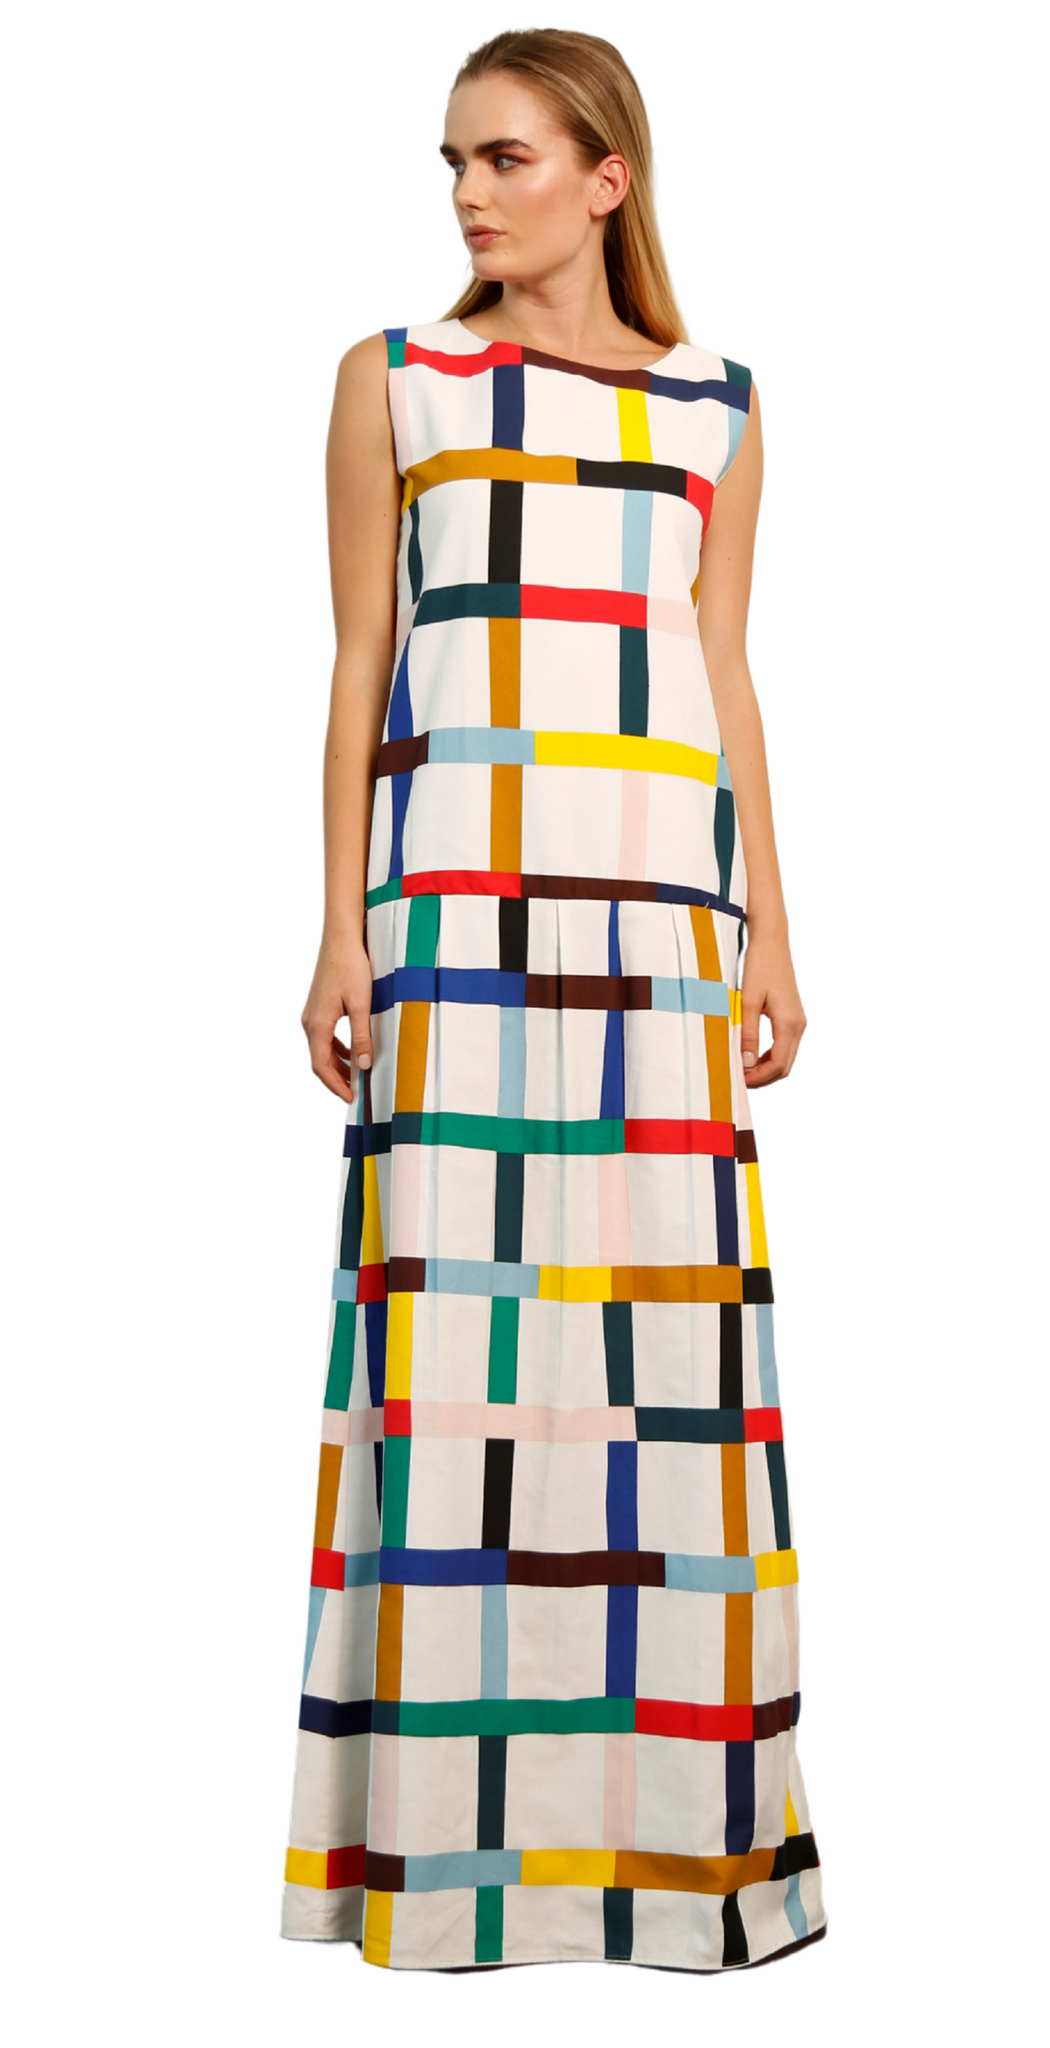 Mondrian Style Print Dress